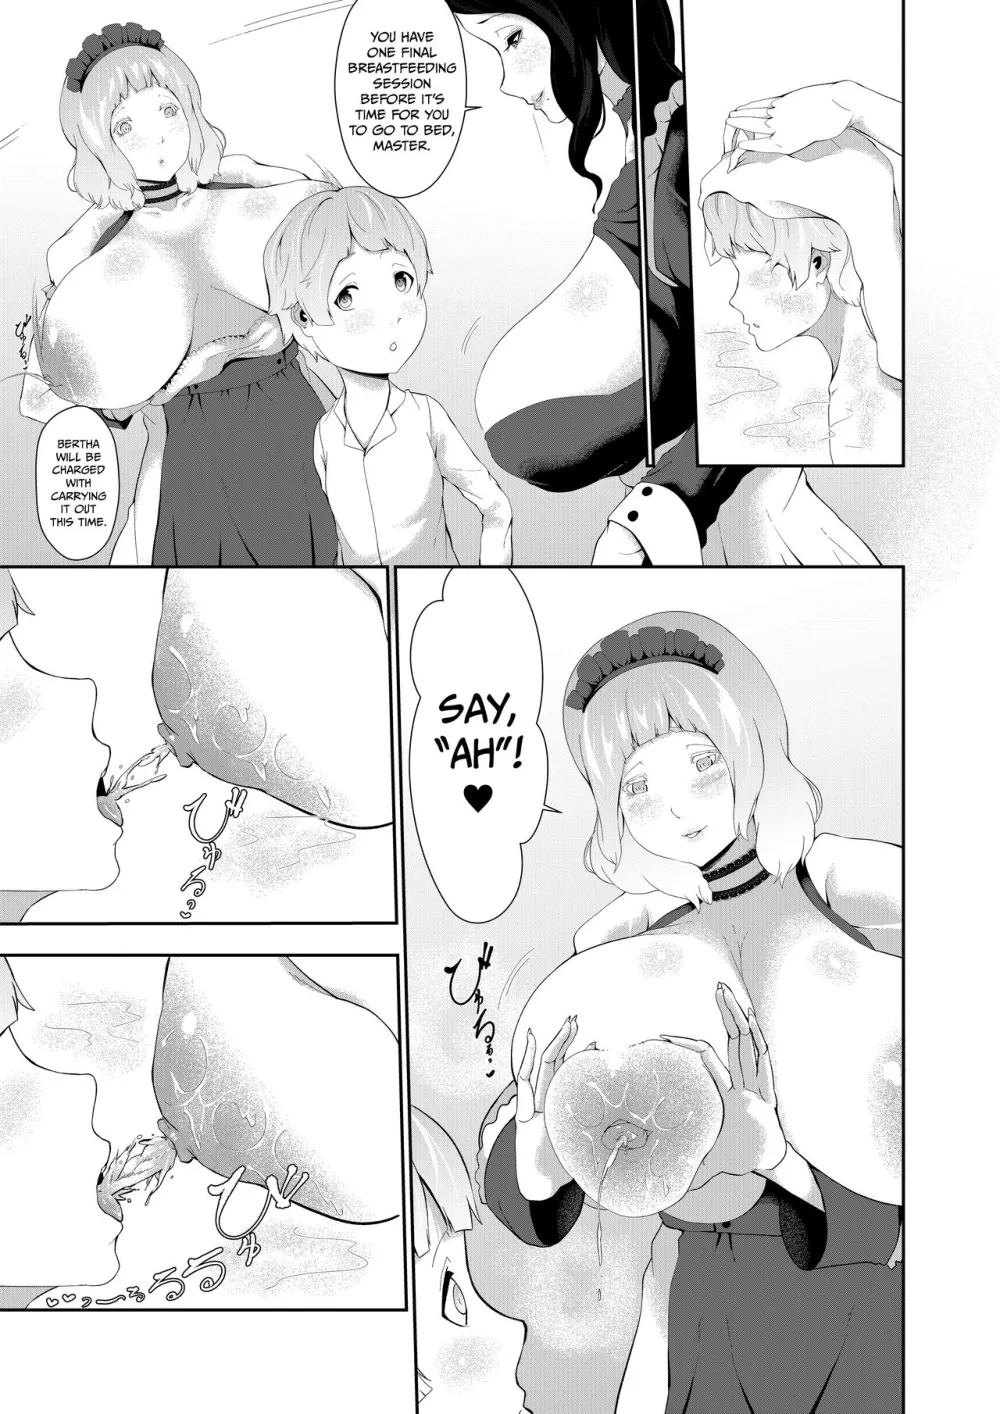 Breastfeeding hentai manga